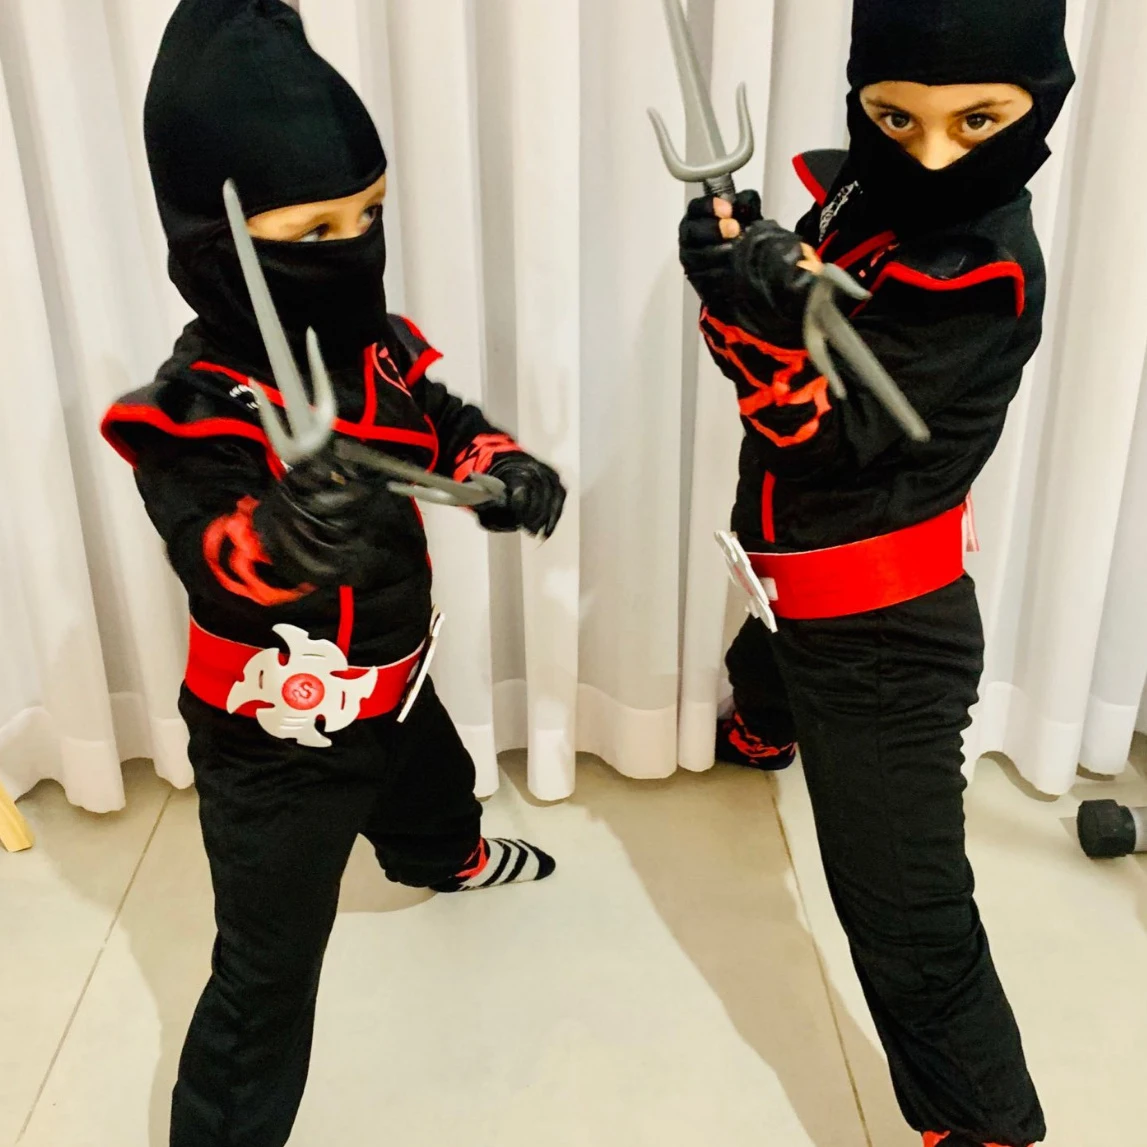 ninja costume kids ninjago costumes halloween party superhero cosplay boys japanese samurai warrior fancy dress power ninja suit free global shipping